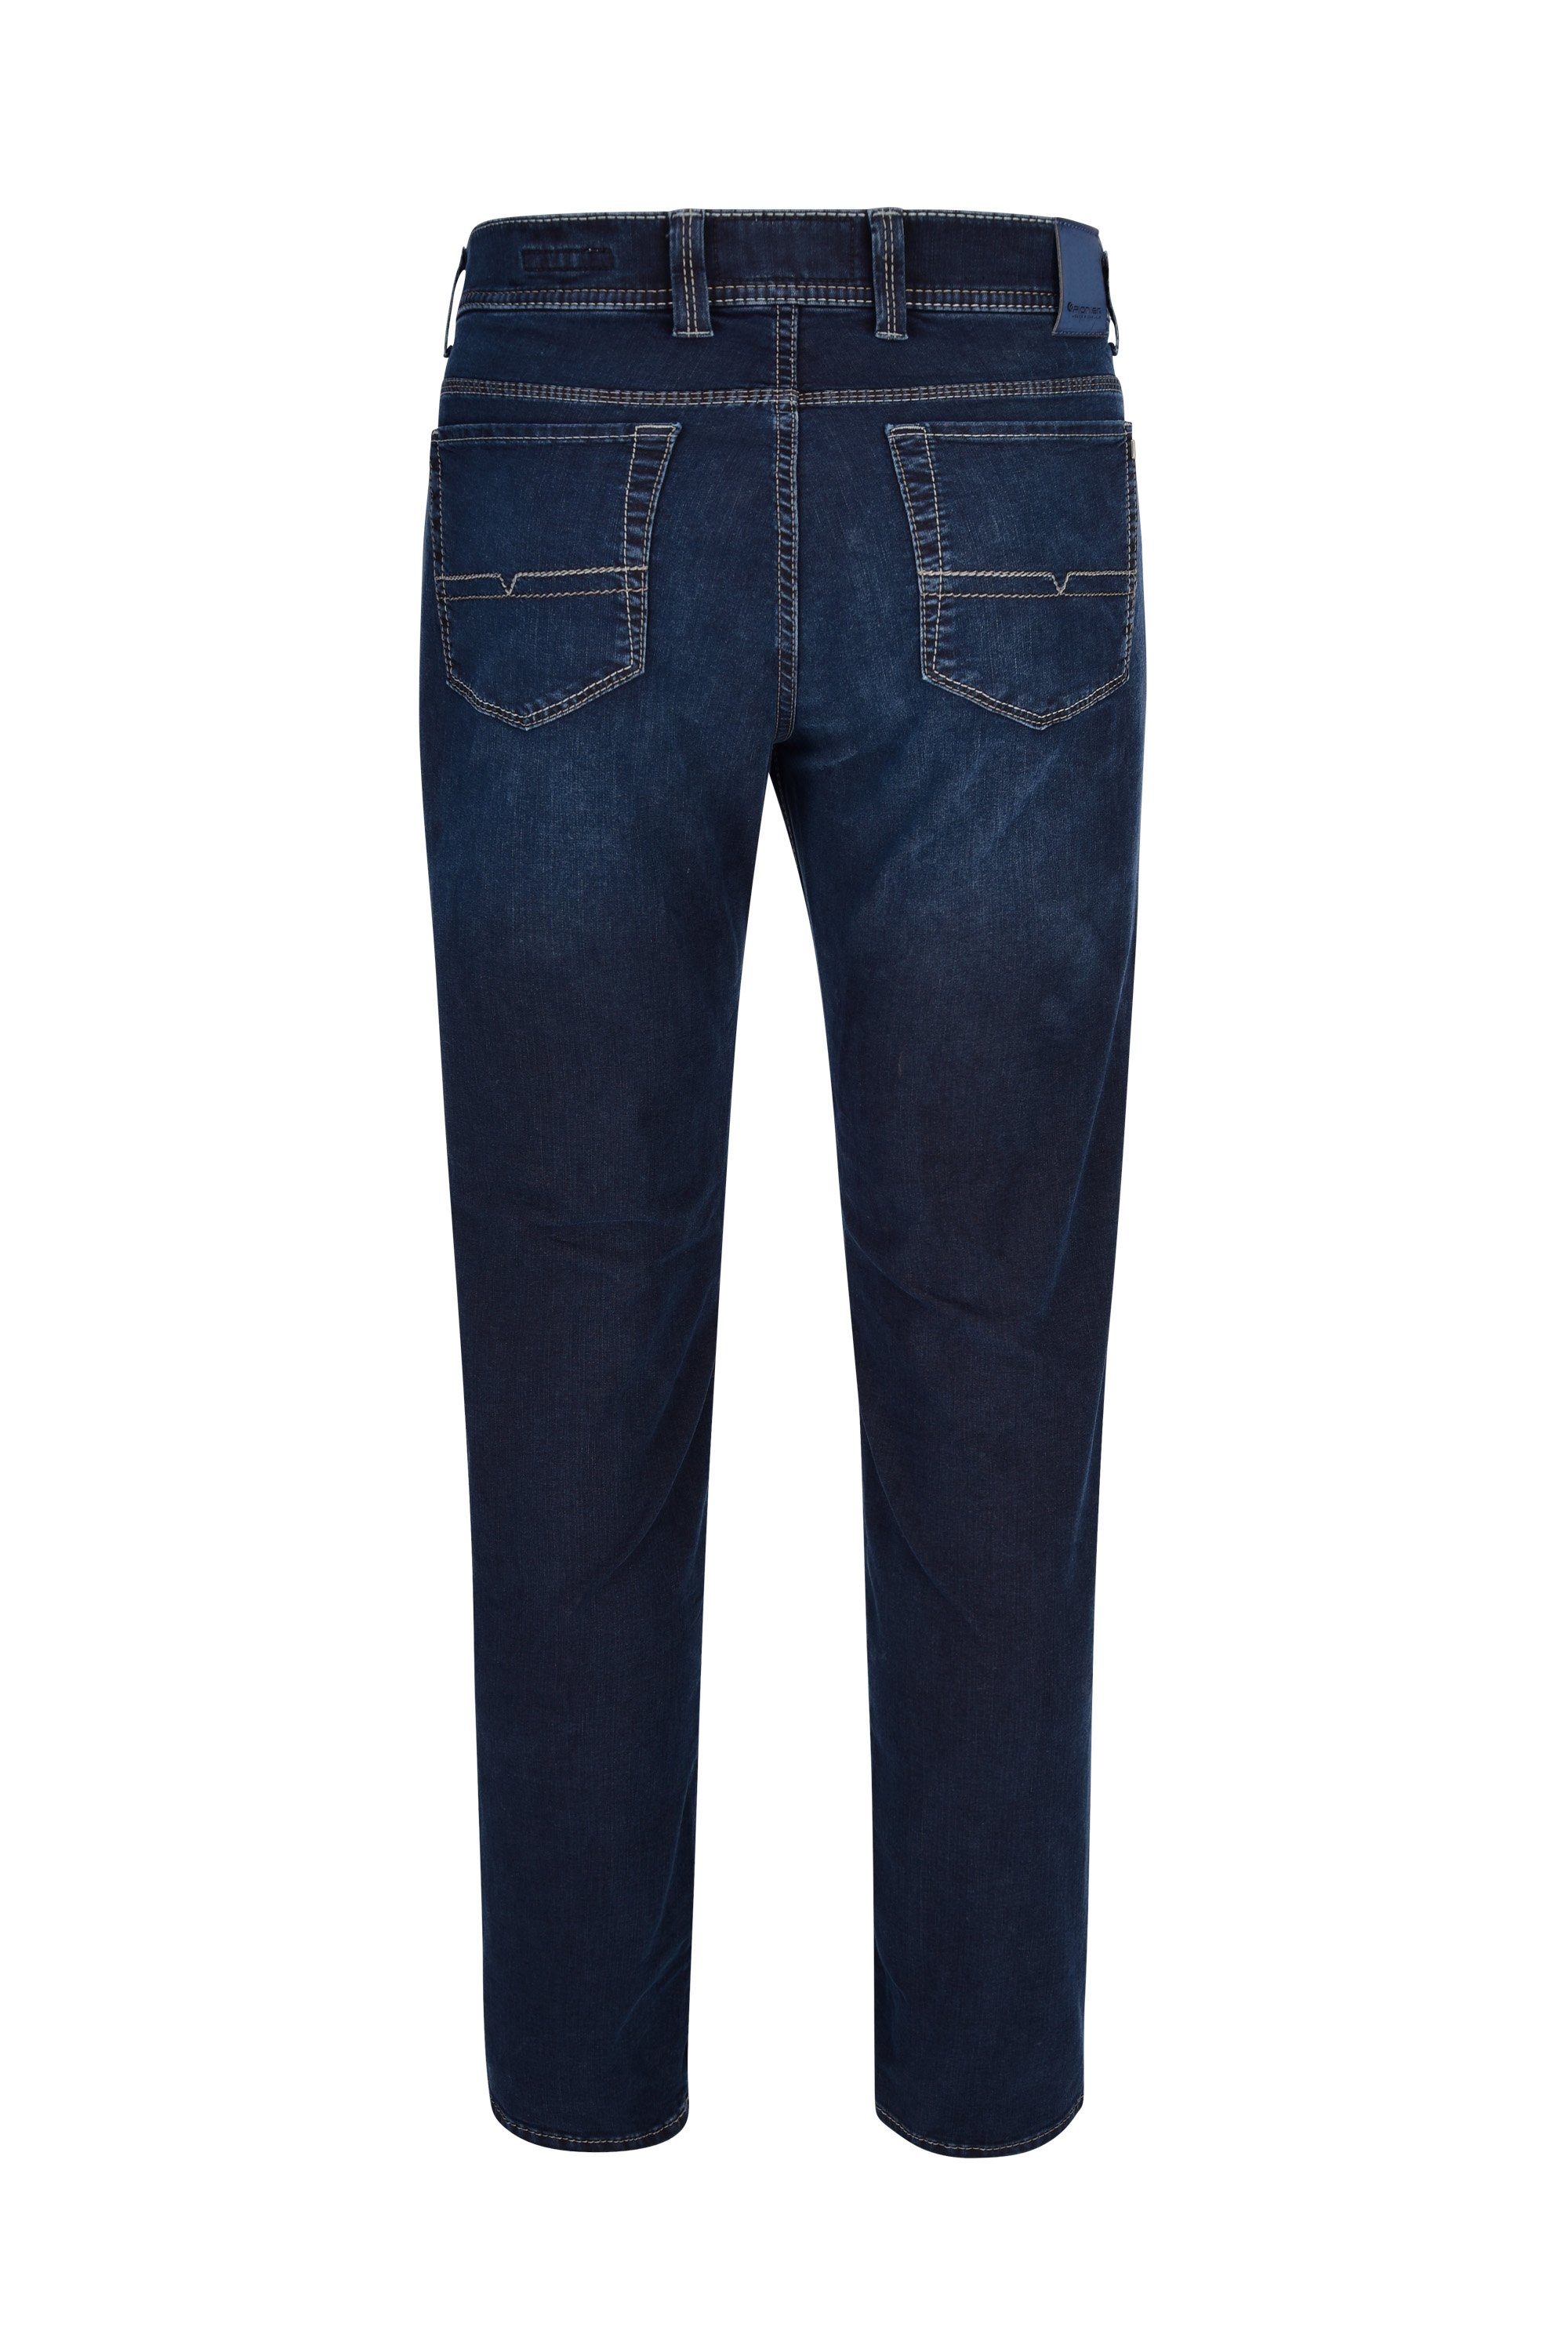 Pionier 5-Pocket-Jeans PIONIER blue 2079 dark 6101.665 THOMAS